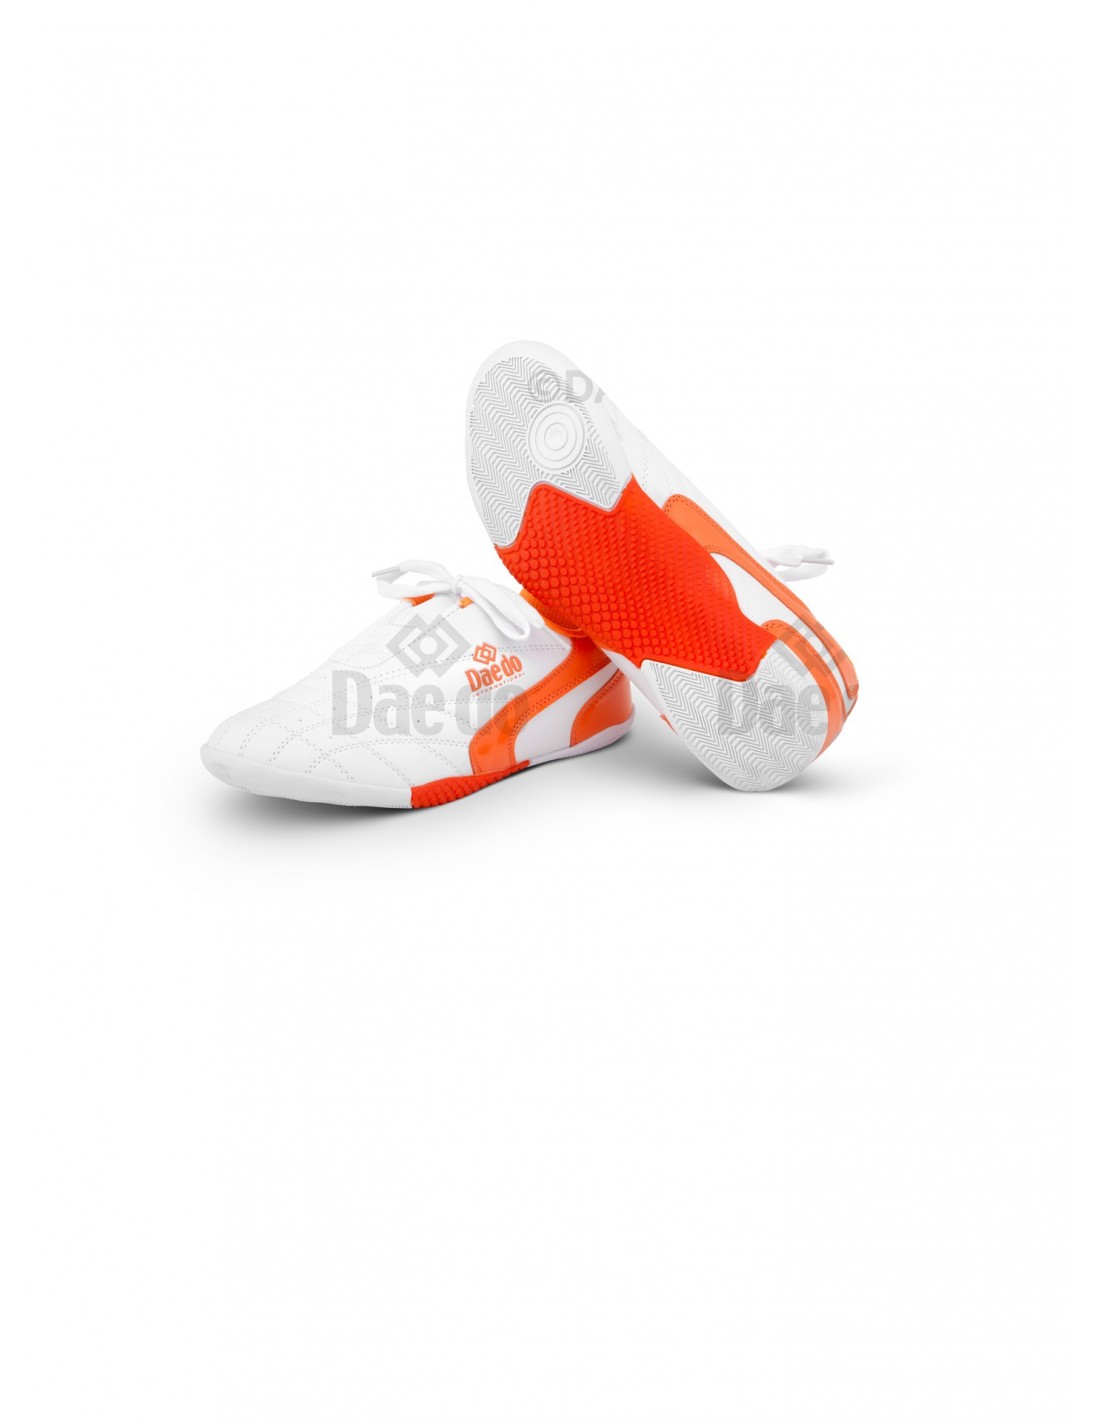 Daedo Taekwondo -  Nuevas Zapatillas Daedo -  Naranja - Kick Disponible hoy !!!! Tallas adulto & niño Daedo Taekwondo  #Kick #taekwondo #orange #naranja #bestoftoday #gifts #newmodel #Daedo  #shoes #sneakers Taekwondo